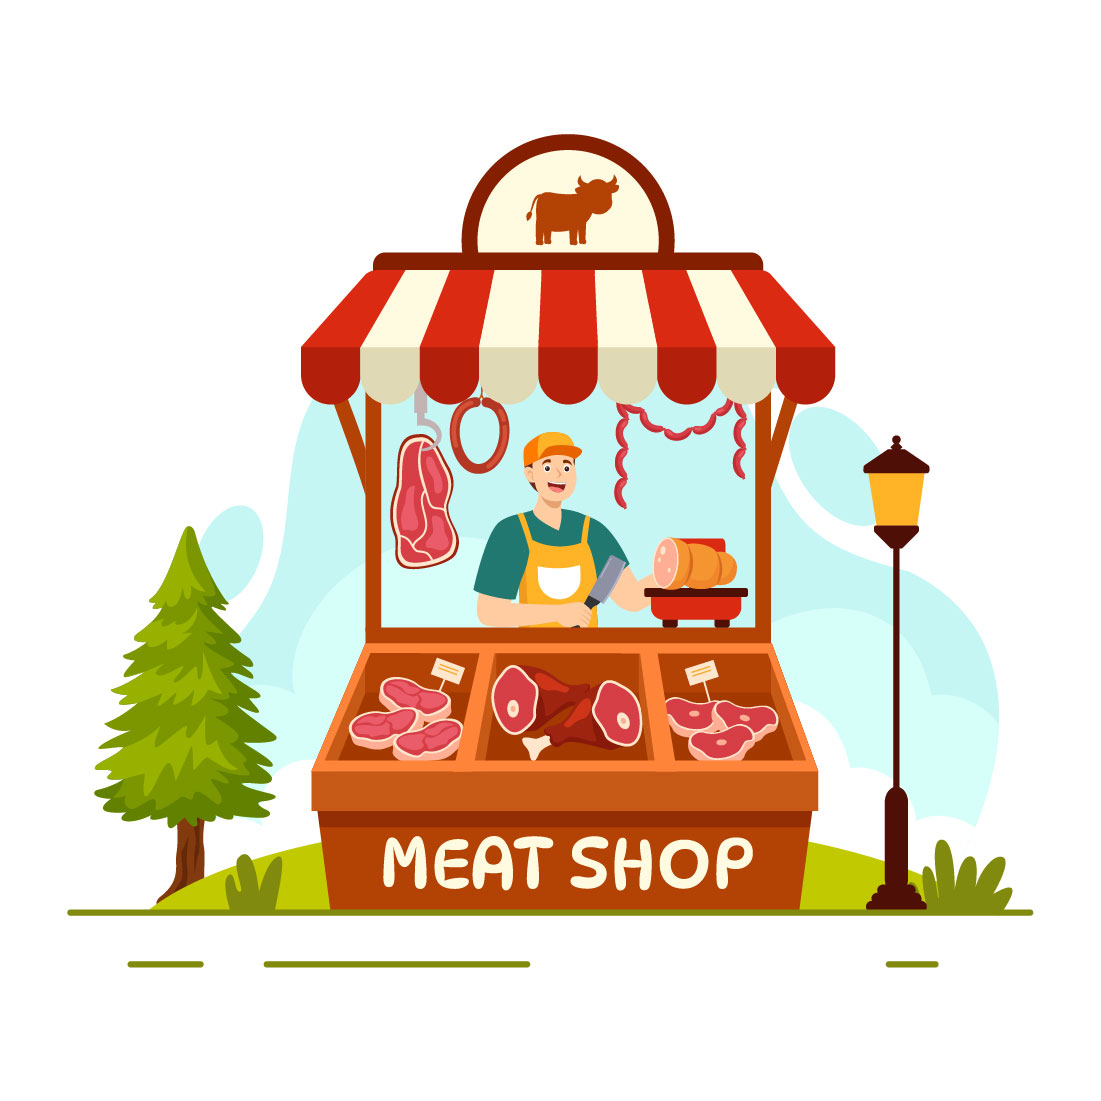 12 Meat Shop Vector Illustration preview image.